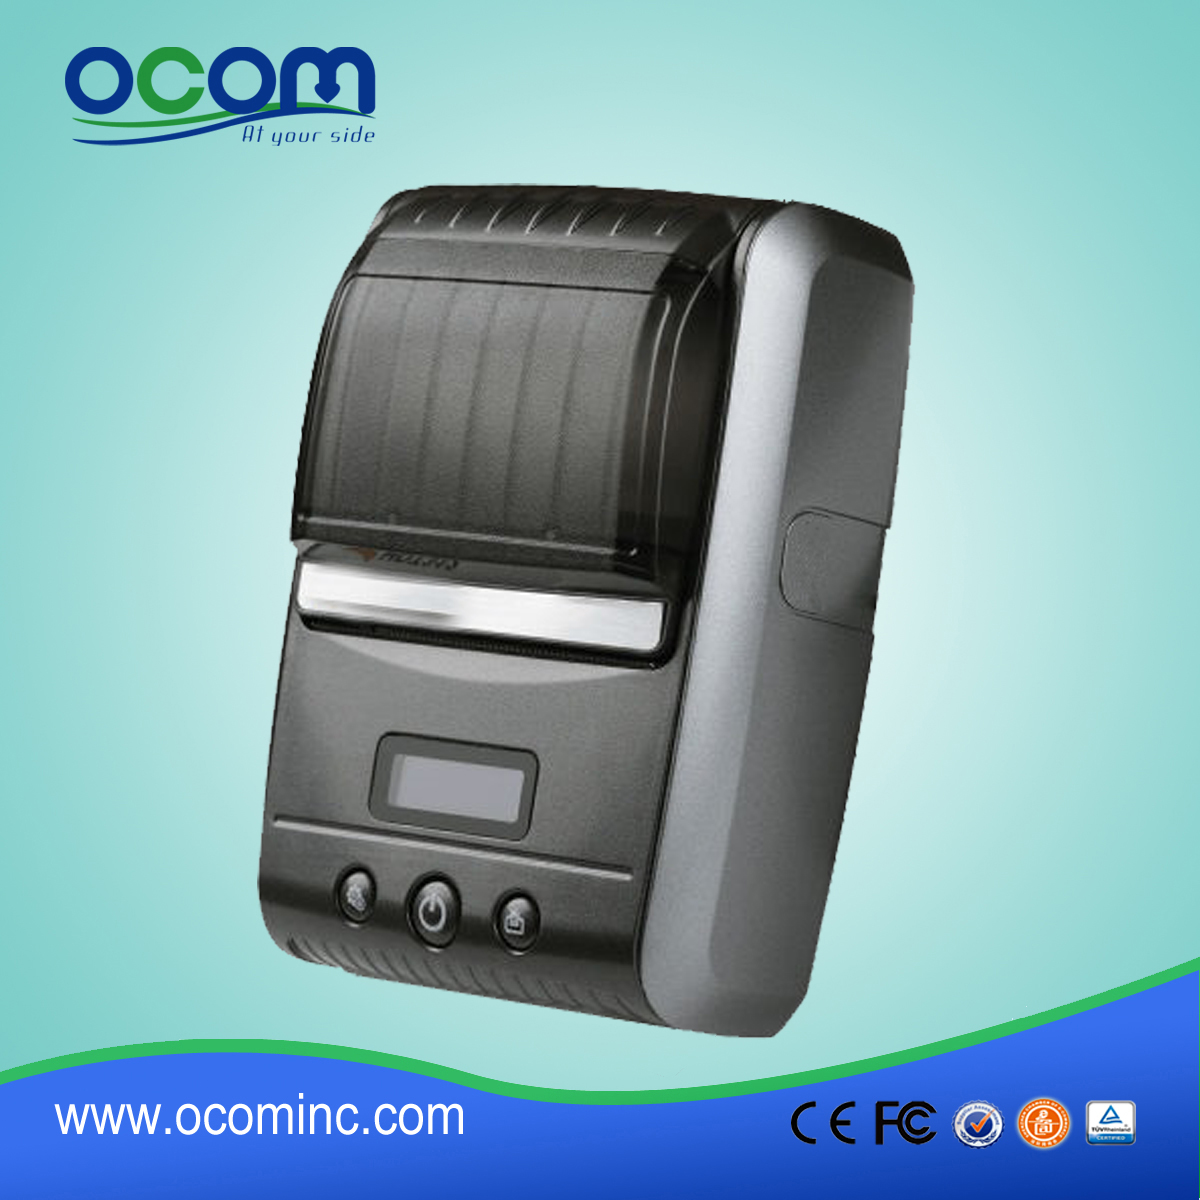 Cina fabbrica Portable etichette stampante termica OCBP M58